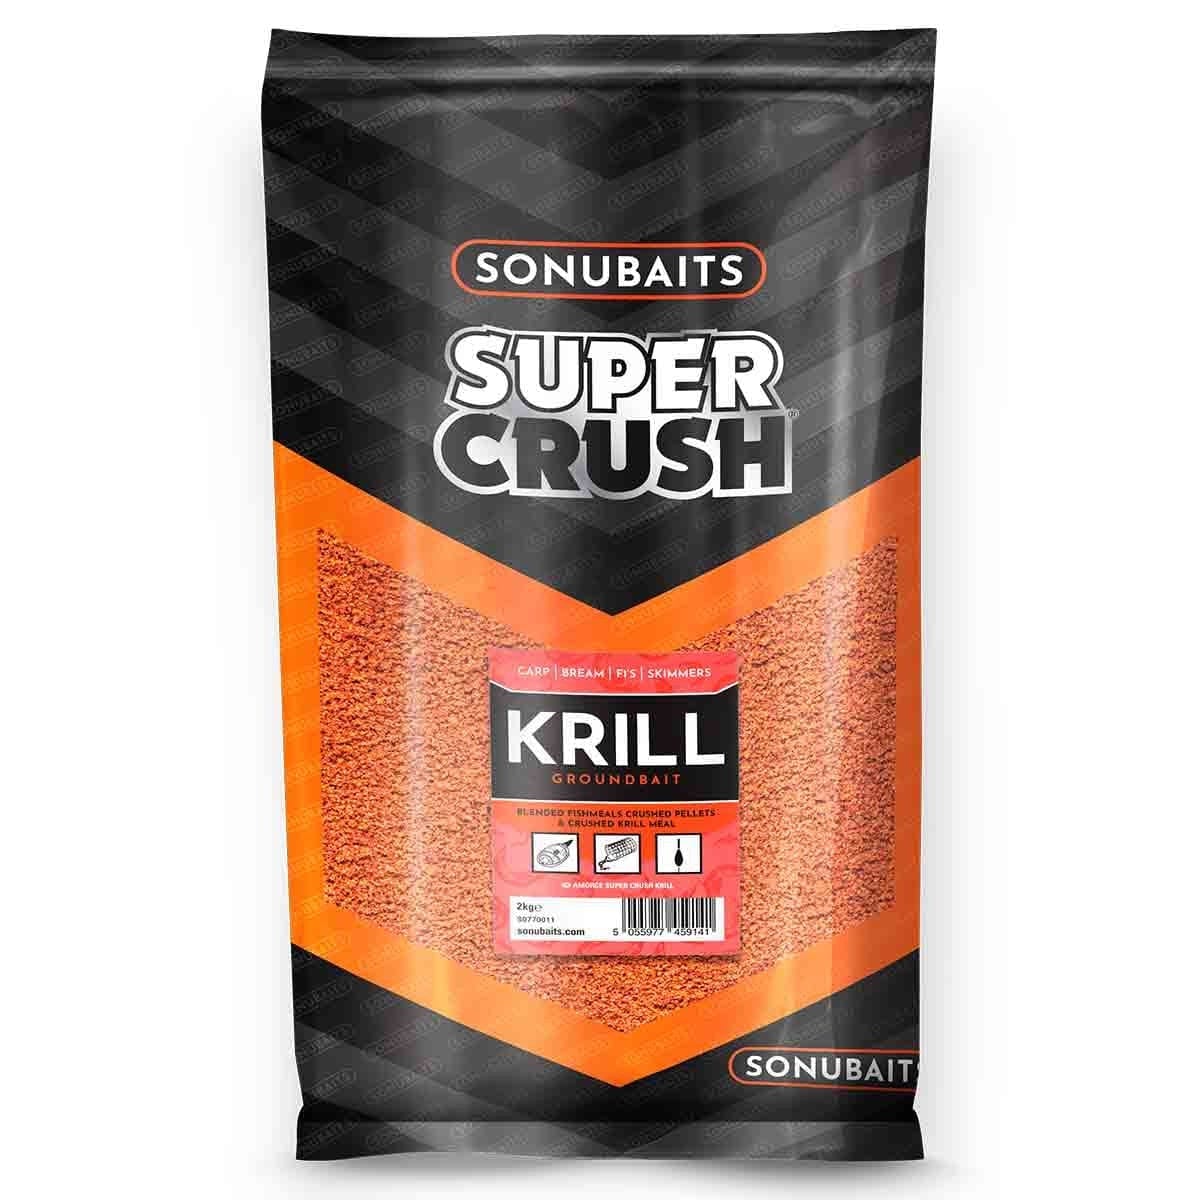 Sonubaits Super Crush Krill (2kg).